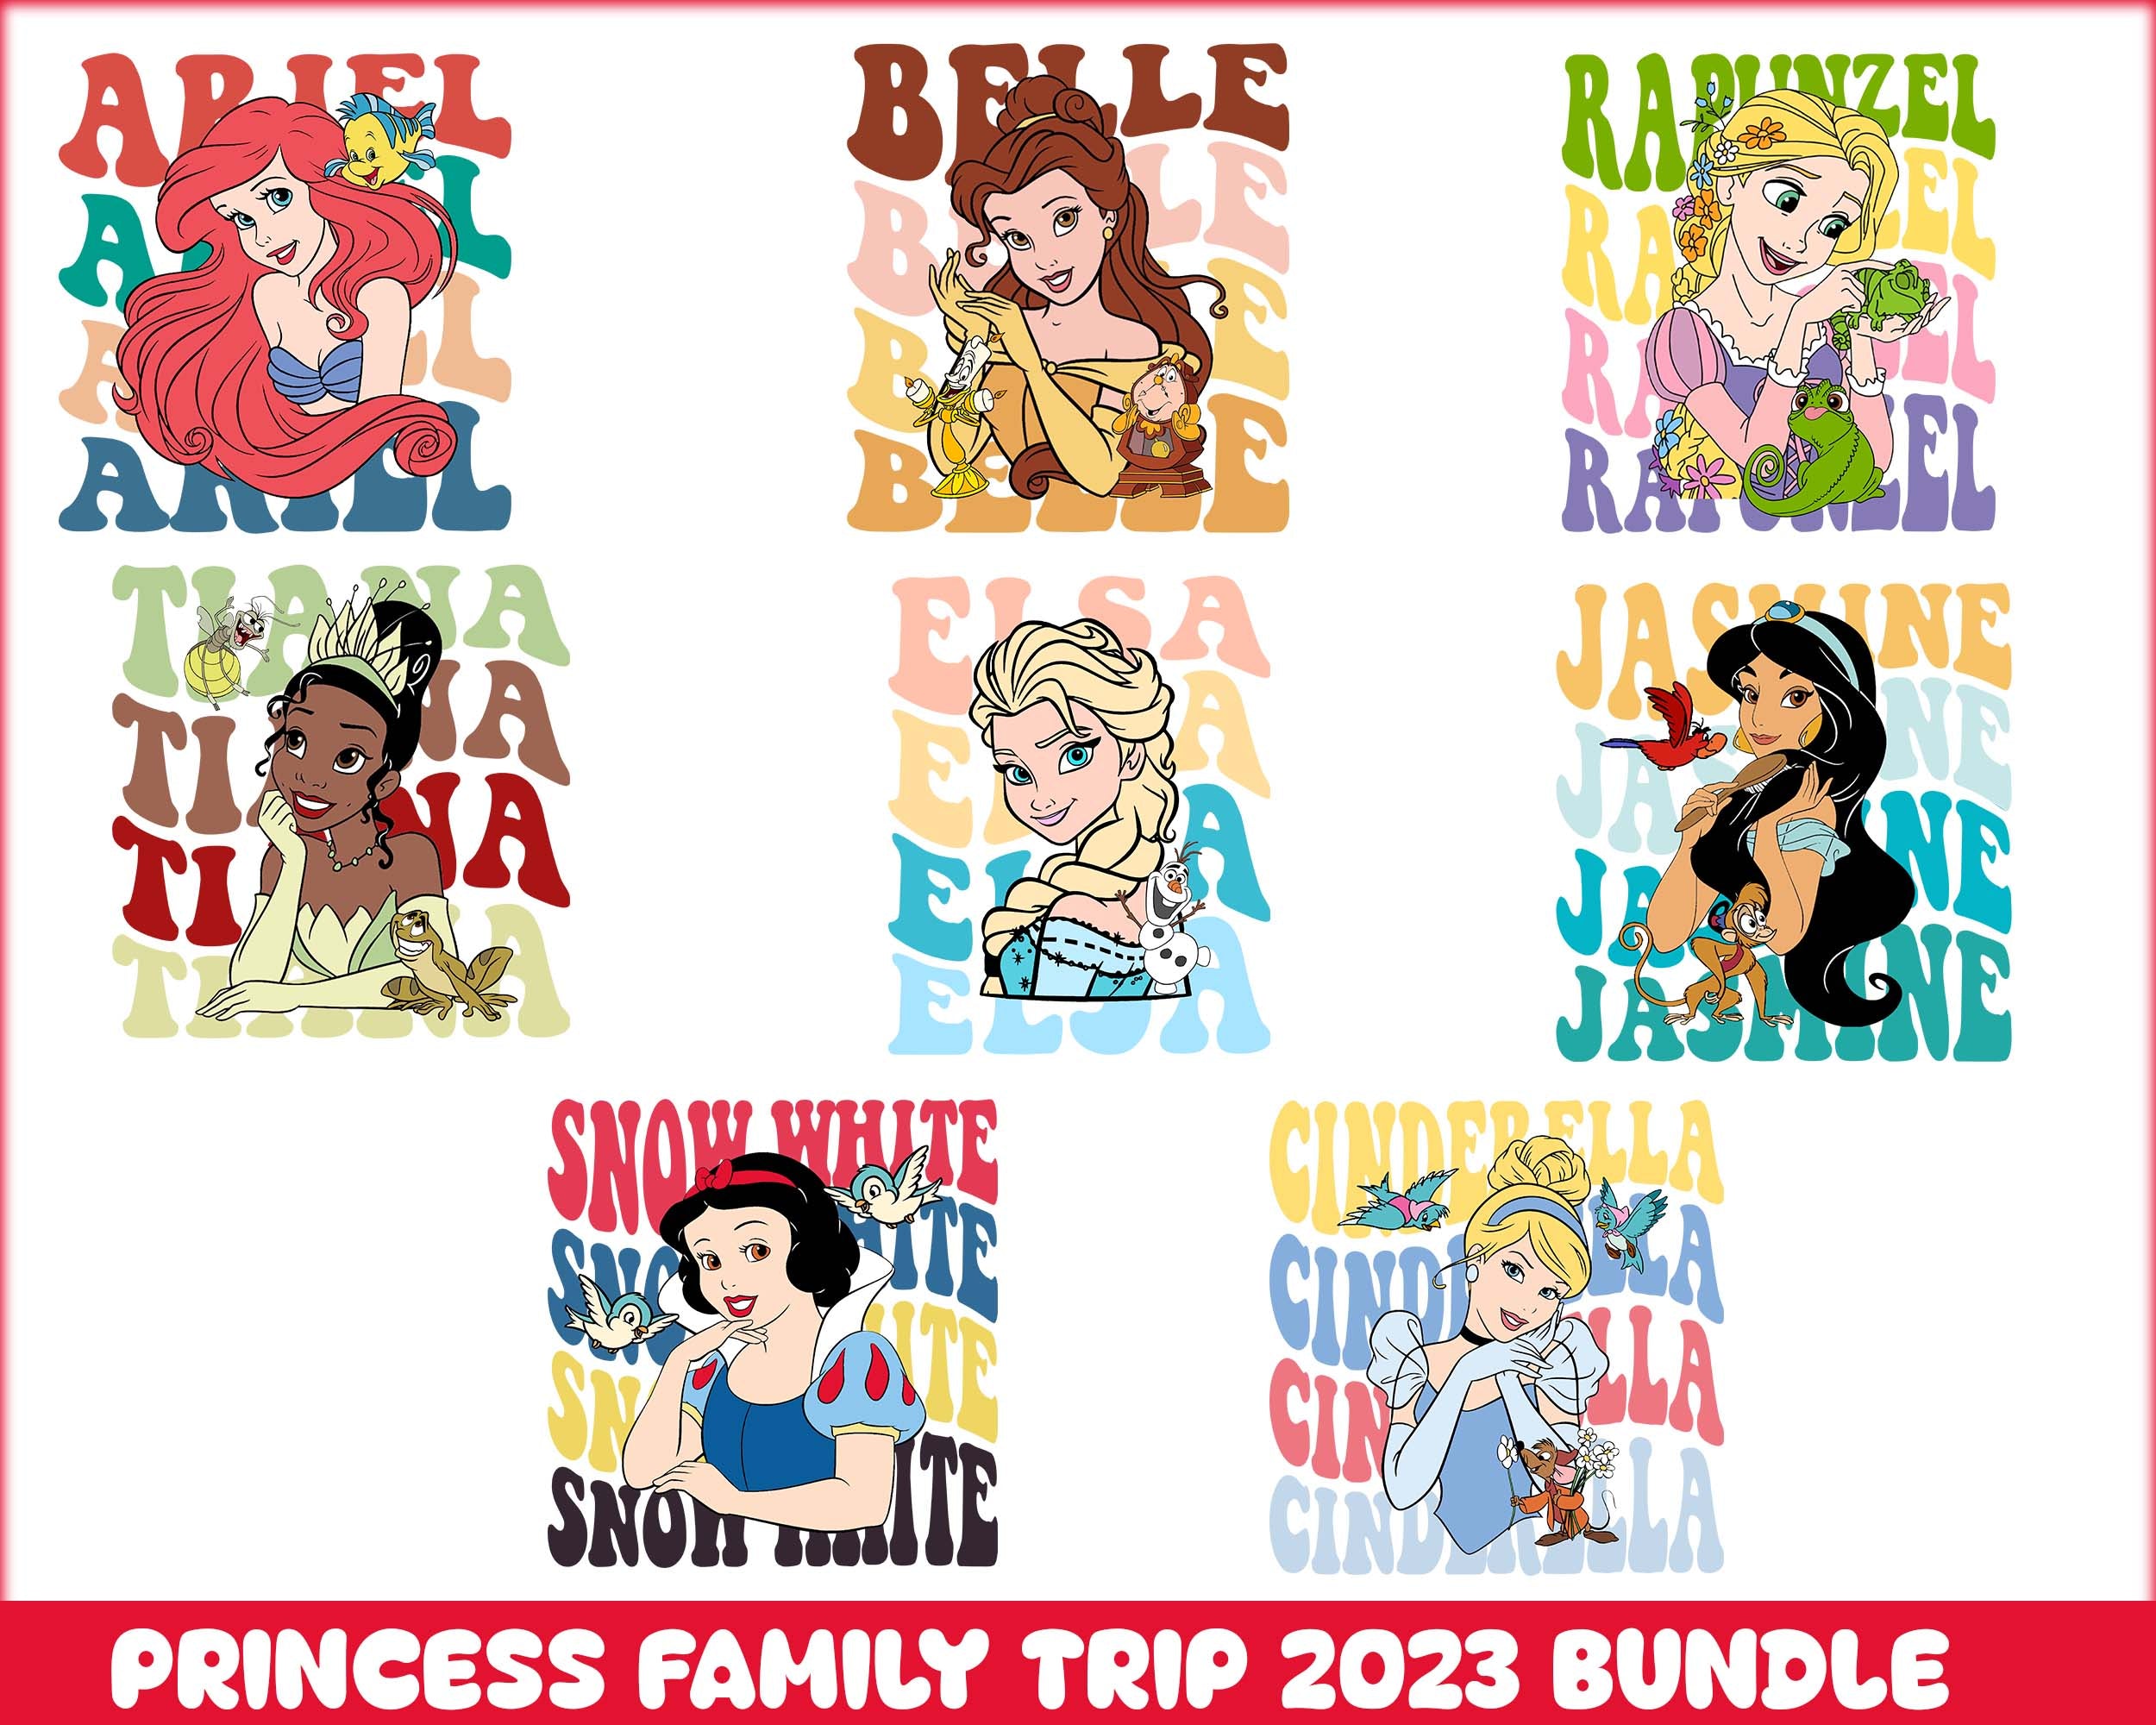 Disney Princess trip PNG, Princess Clipart, Princess Girl bundle , Magical Kingdom, Magic Kingdom Princess